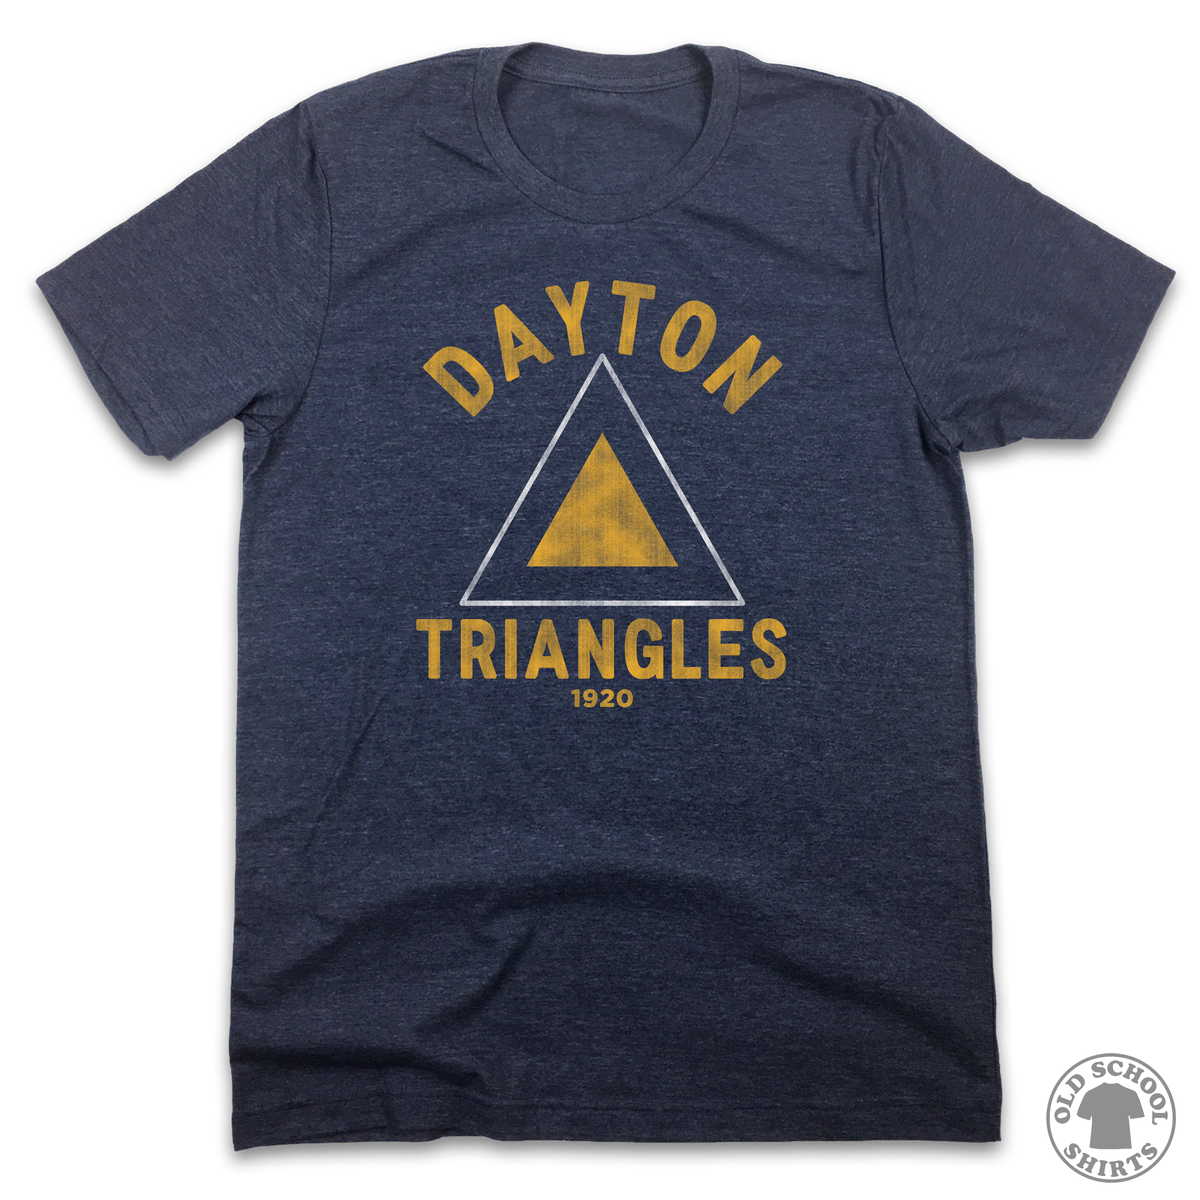 Dayton Triangles - Old School Shirts- Retro Sports T Shirts